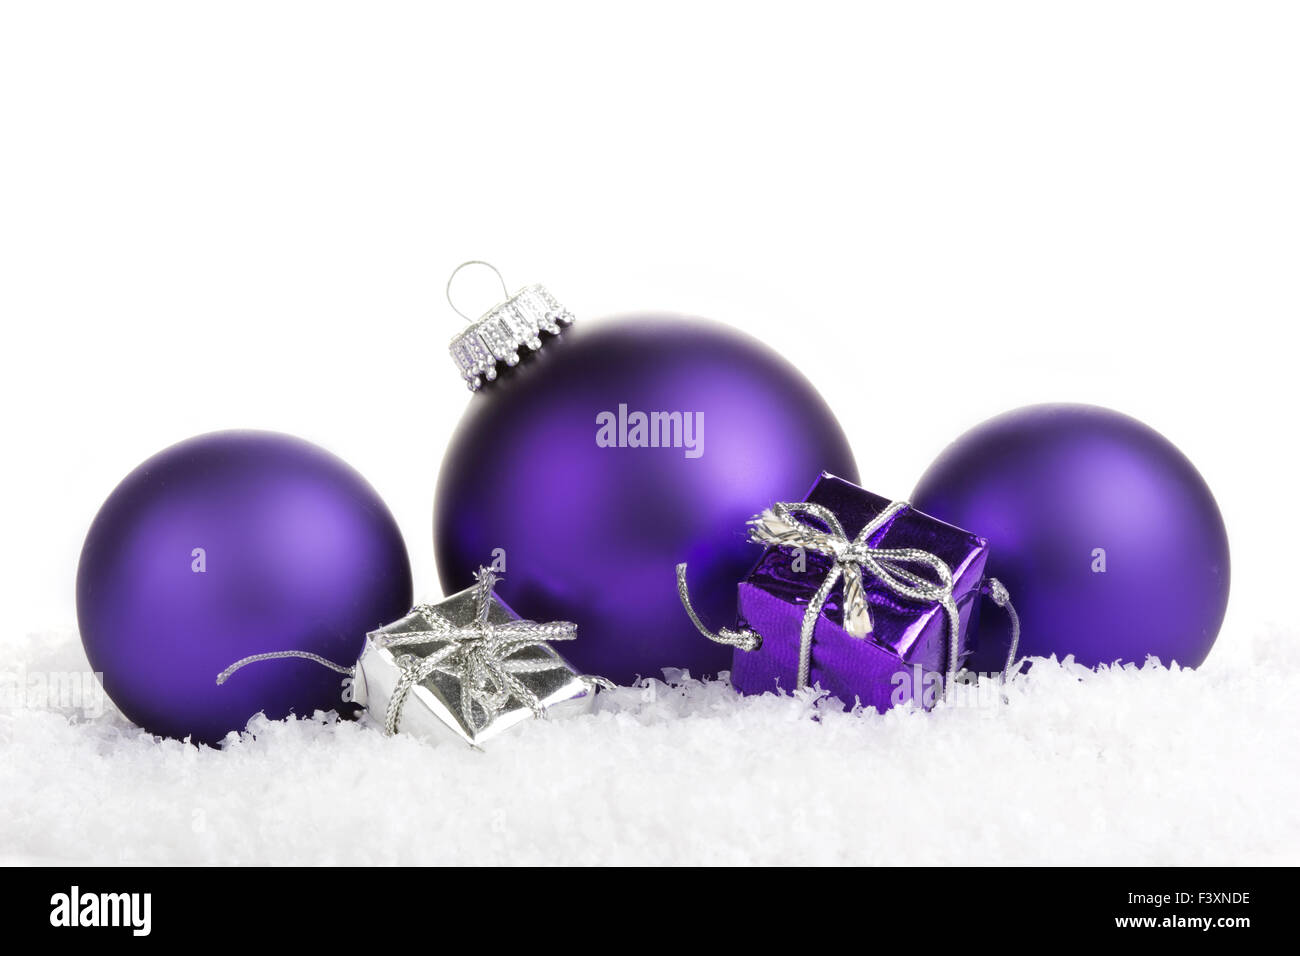 Christmas balls purple with presents Stock Photo